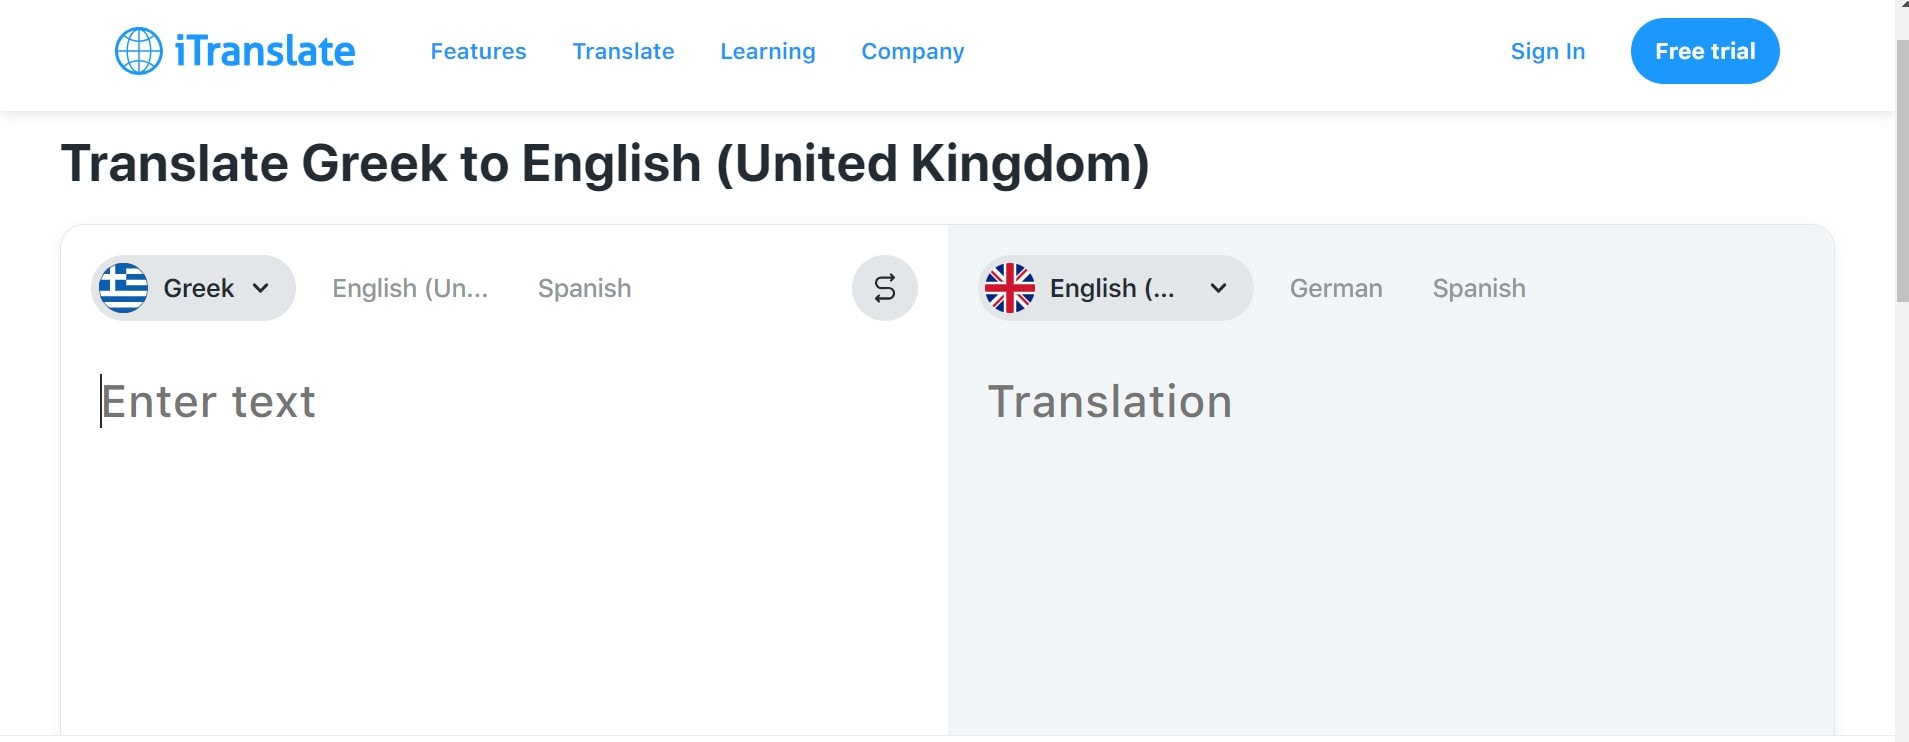 iTranslate for Greek to English translation online